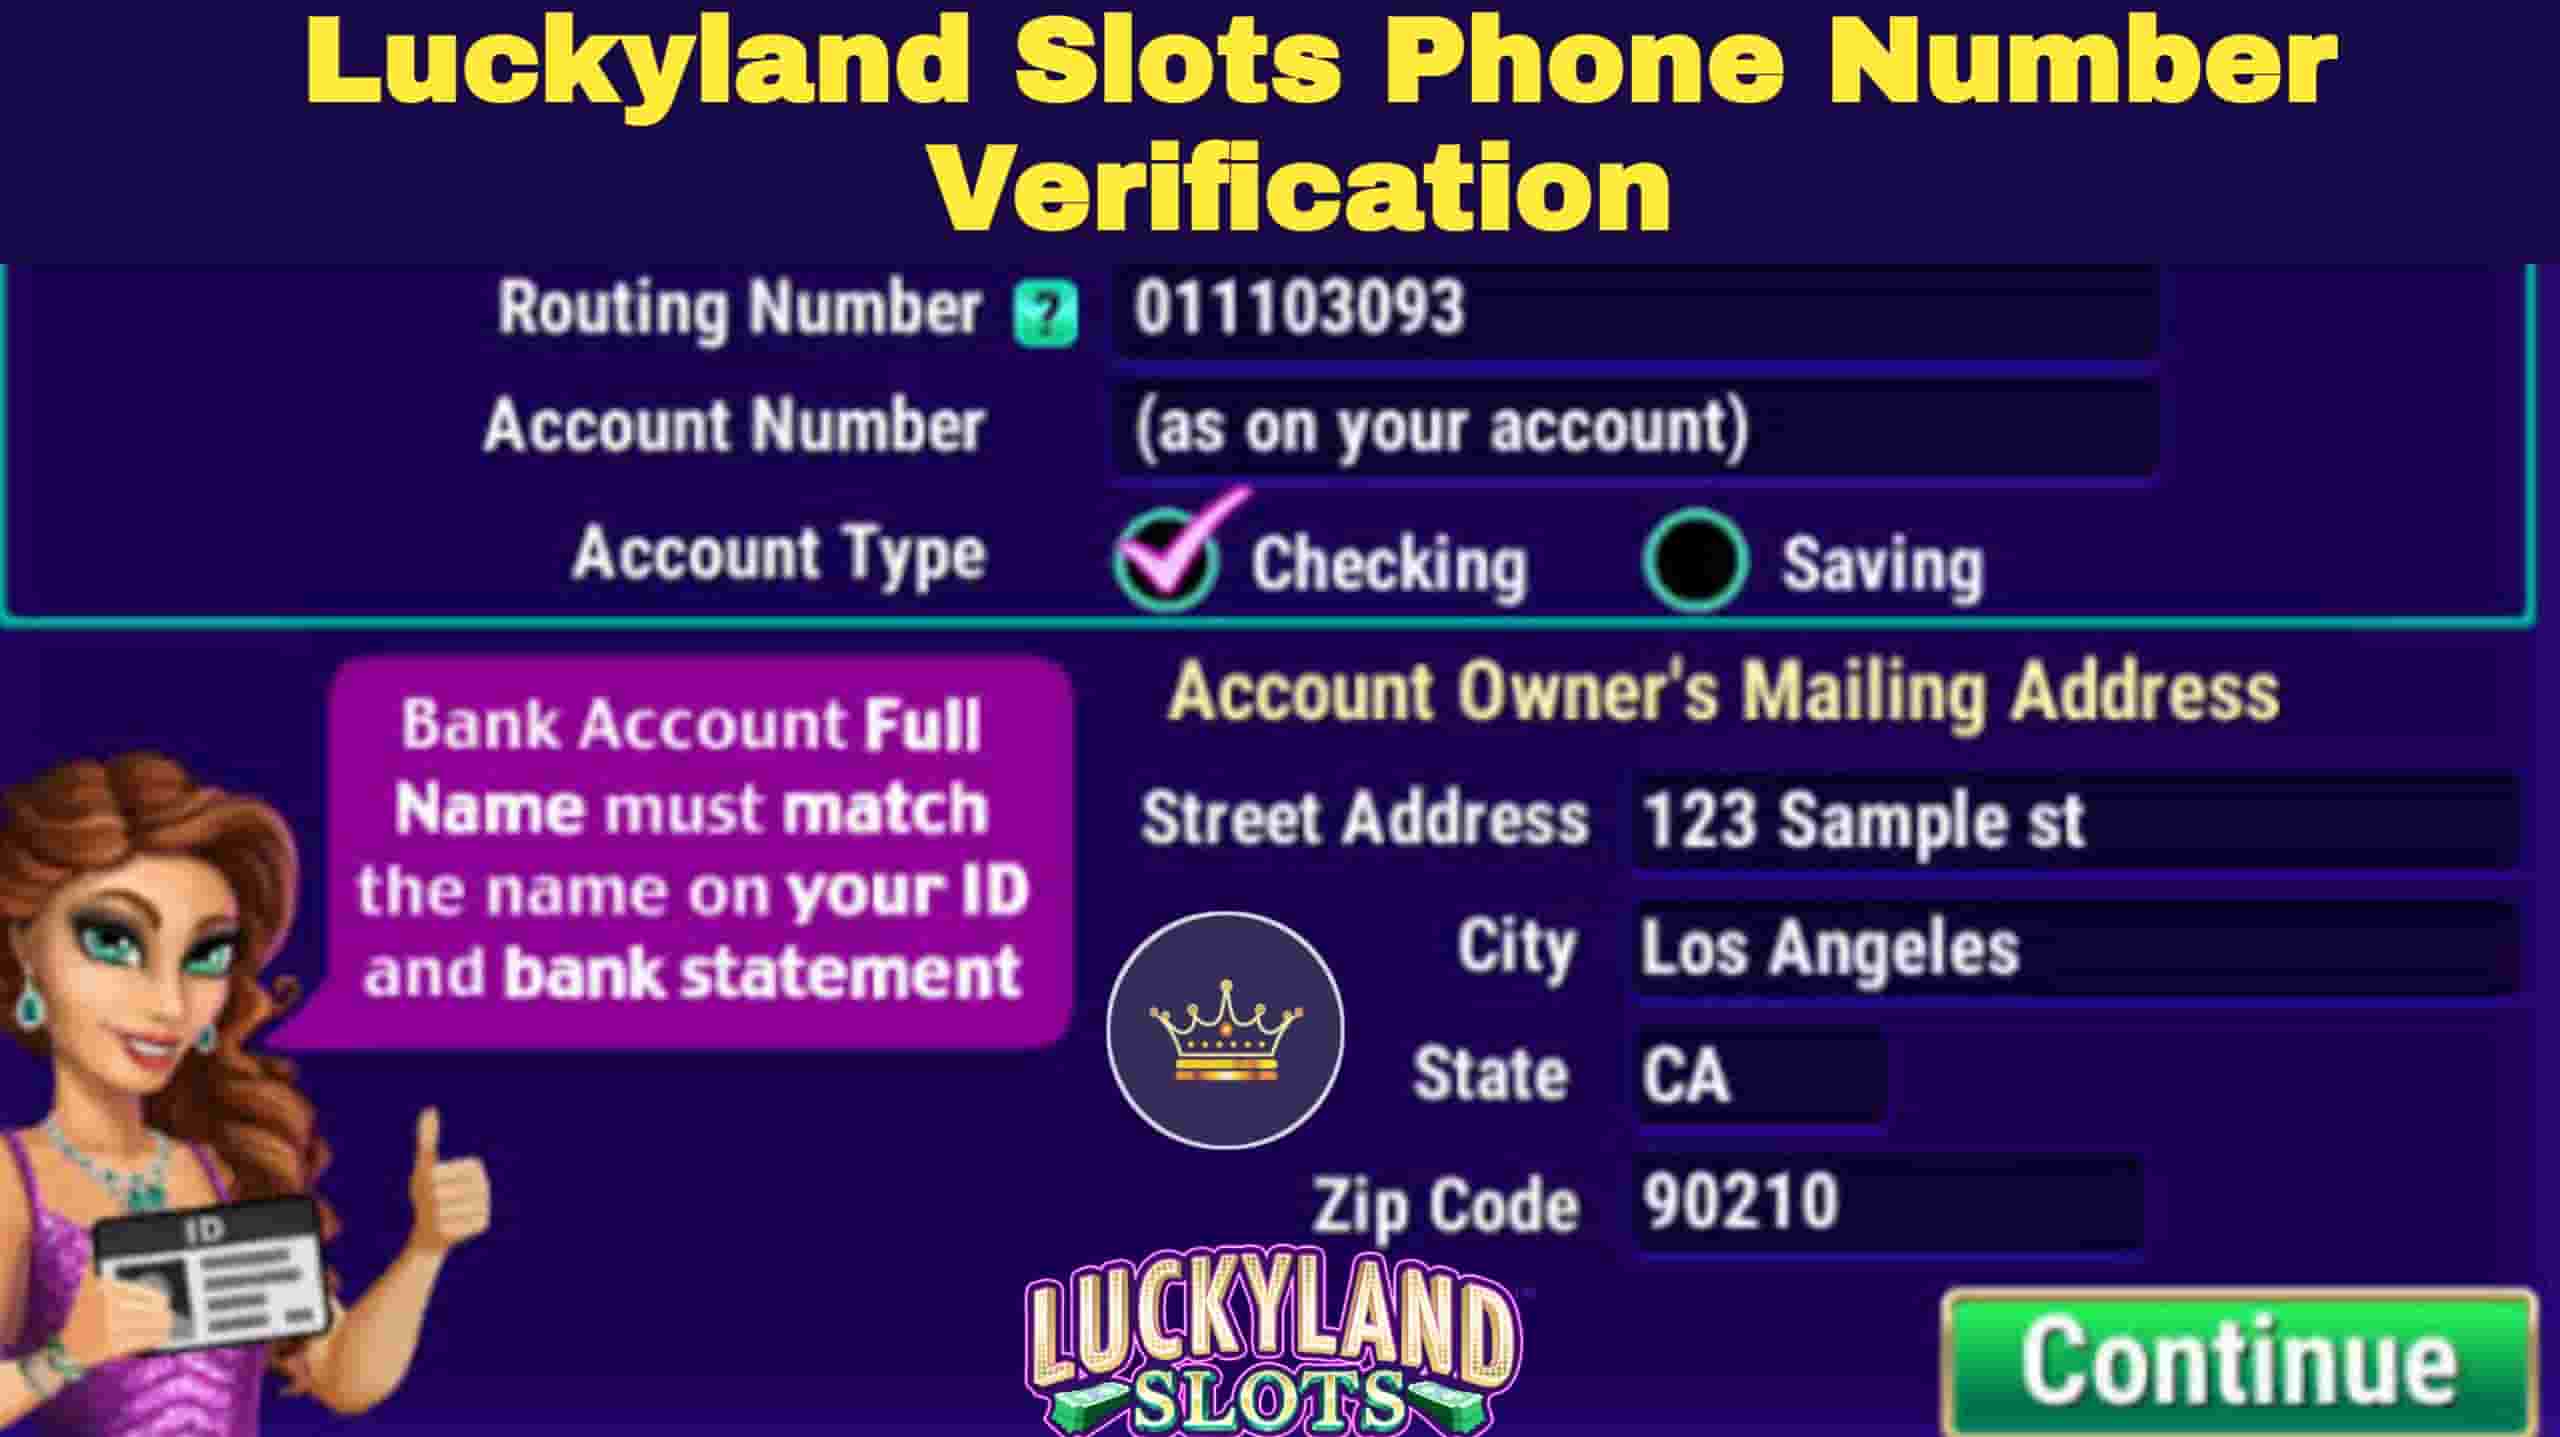 LuckyLand Slots Phone Number Verification